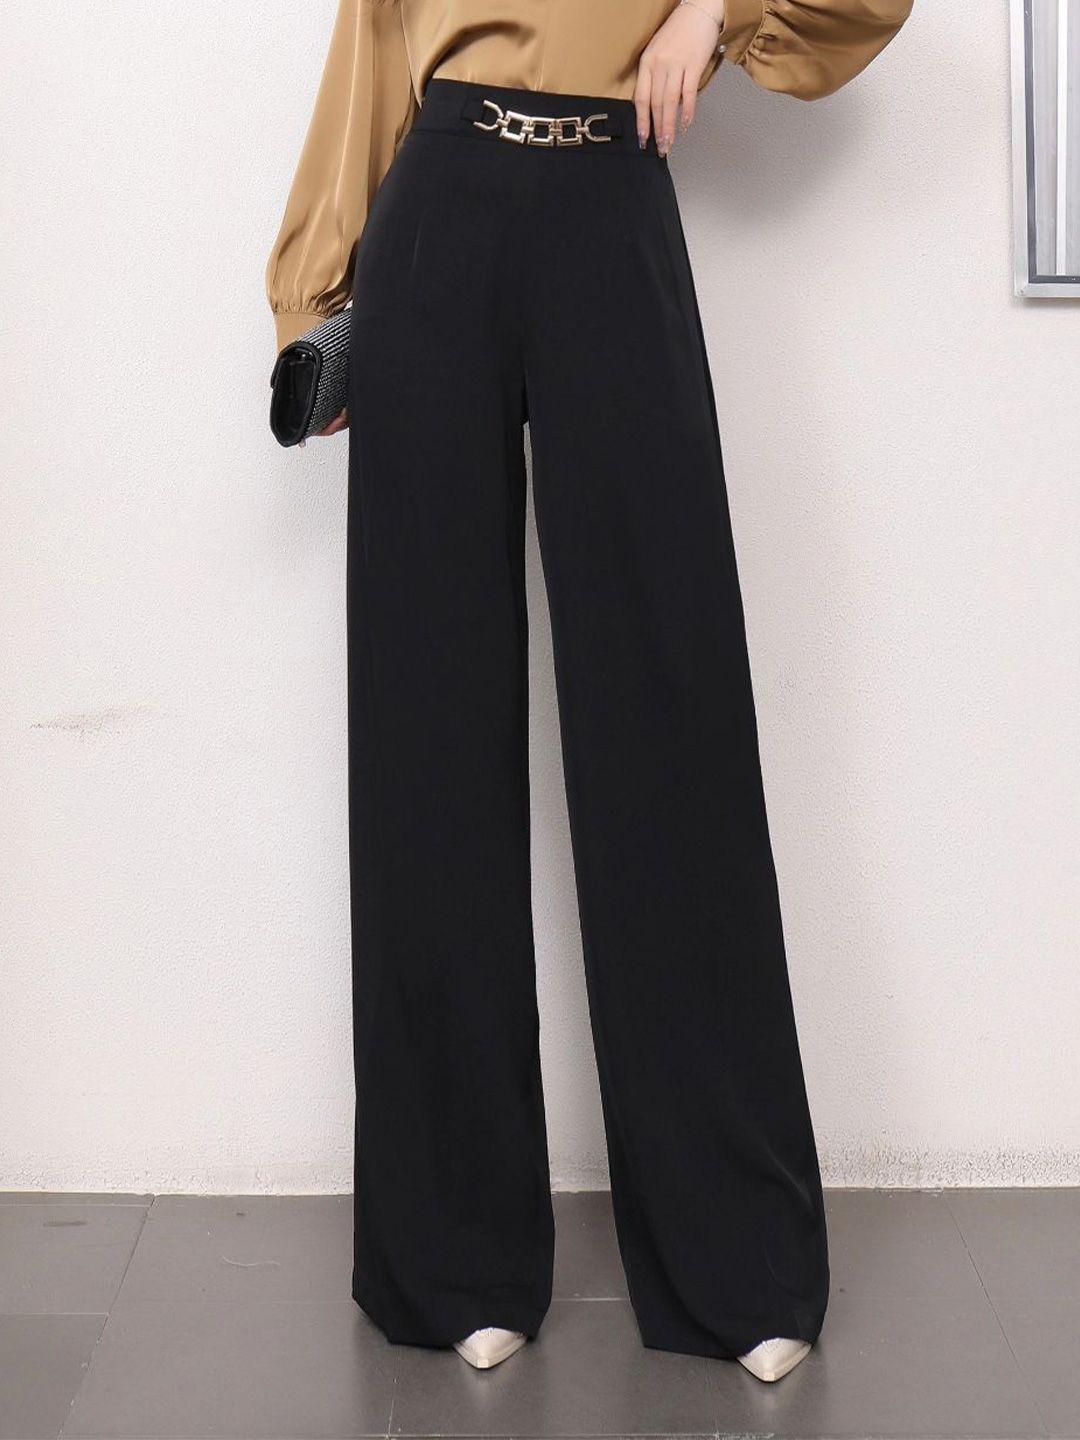 stylecast women black flared trousers